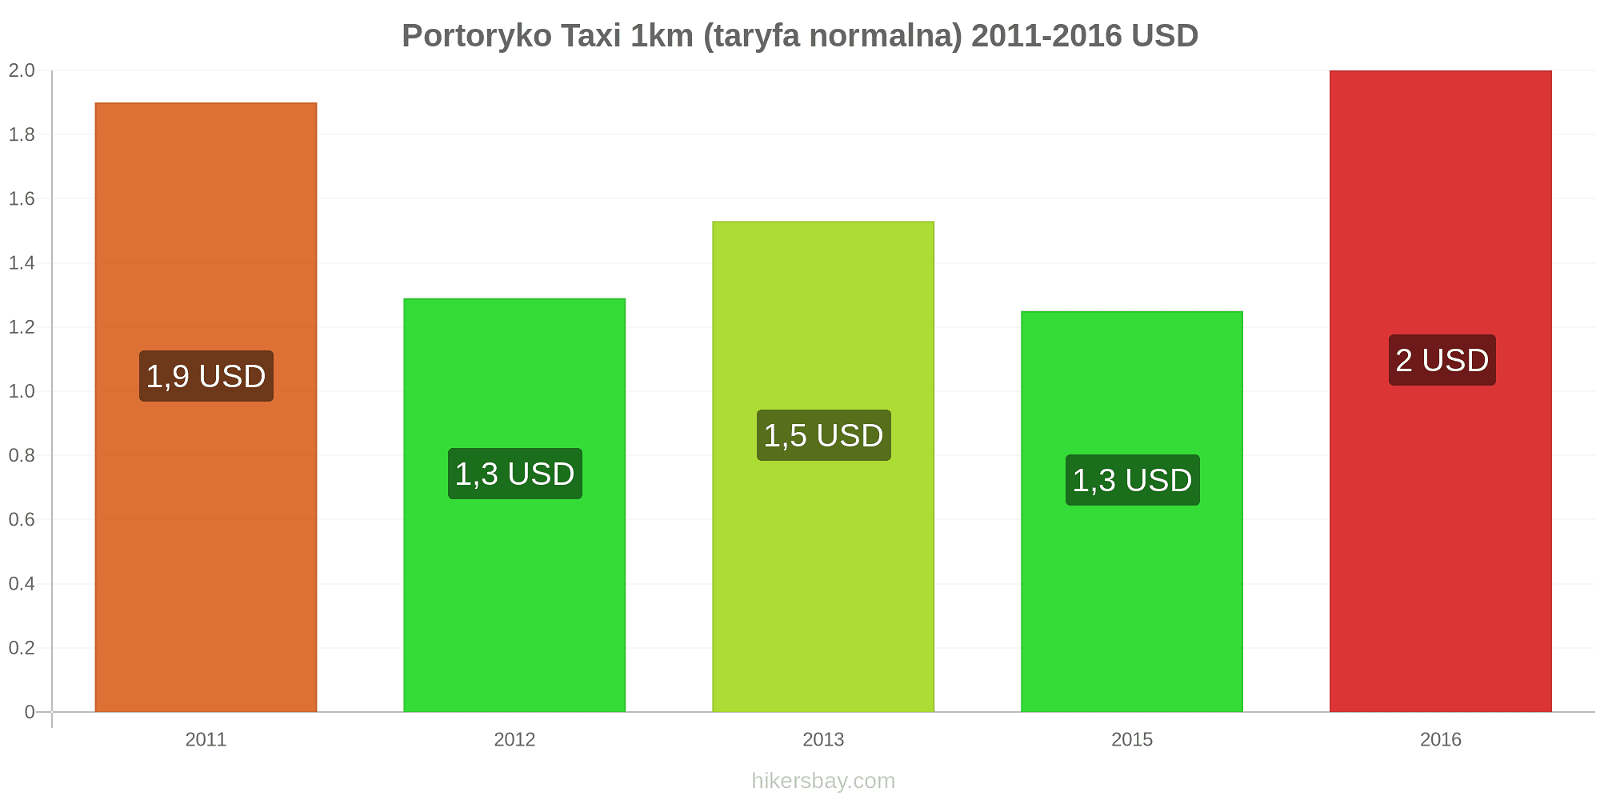 Portoryko zmiany cen Taxi 1km (taryfa normalna) hikersbay.com